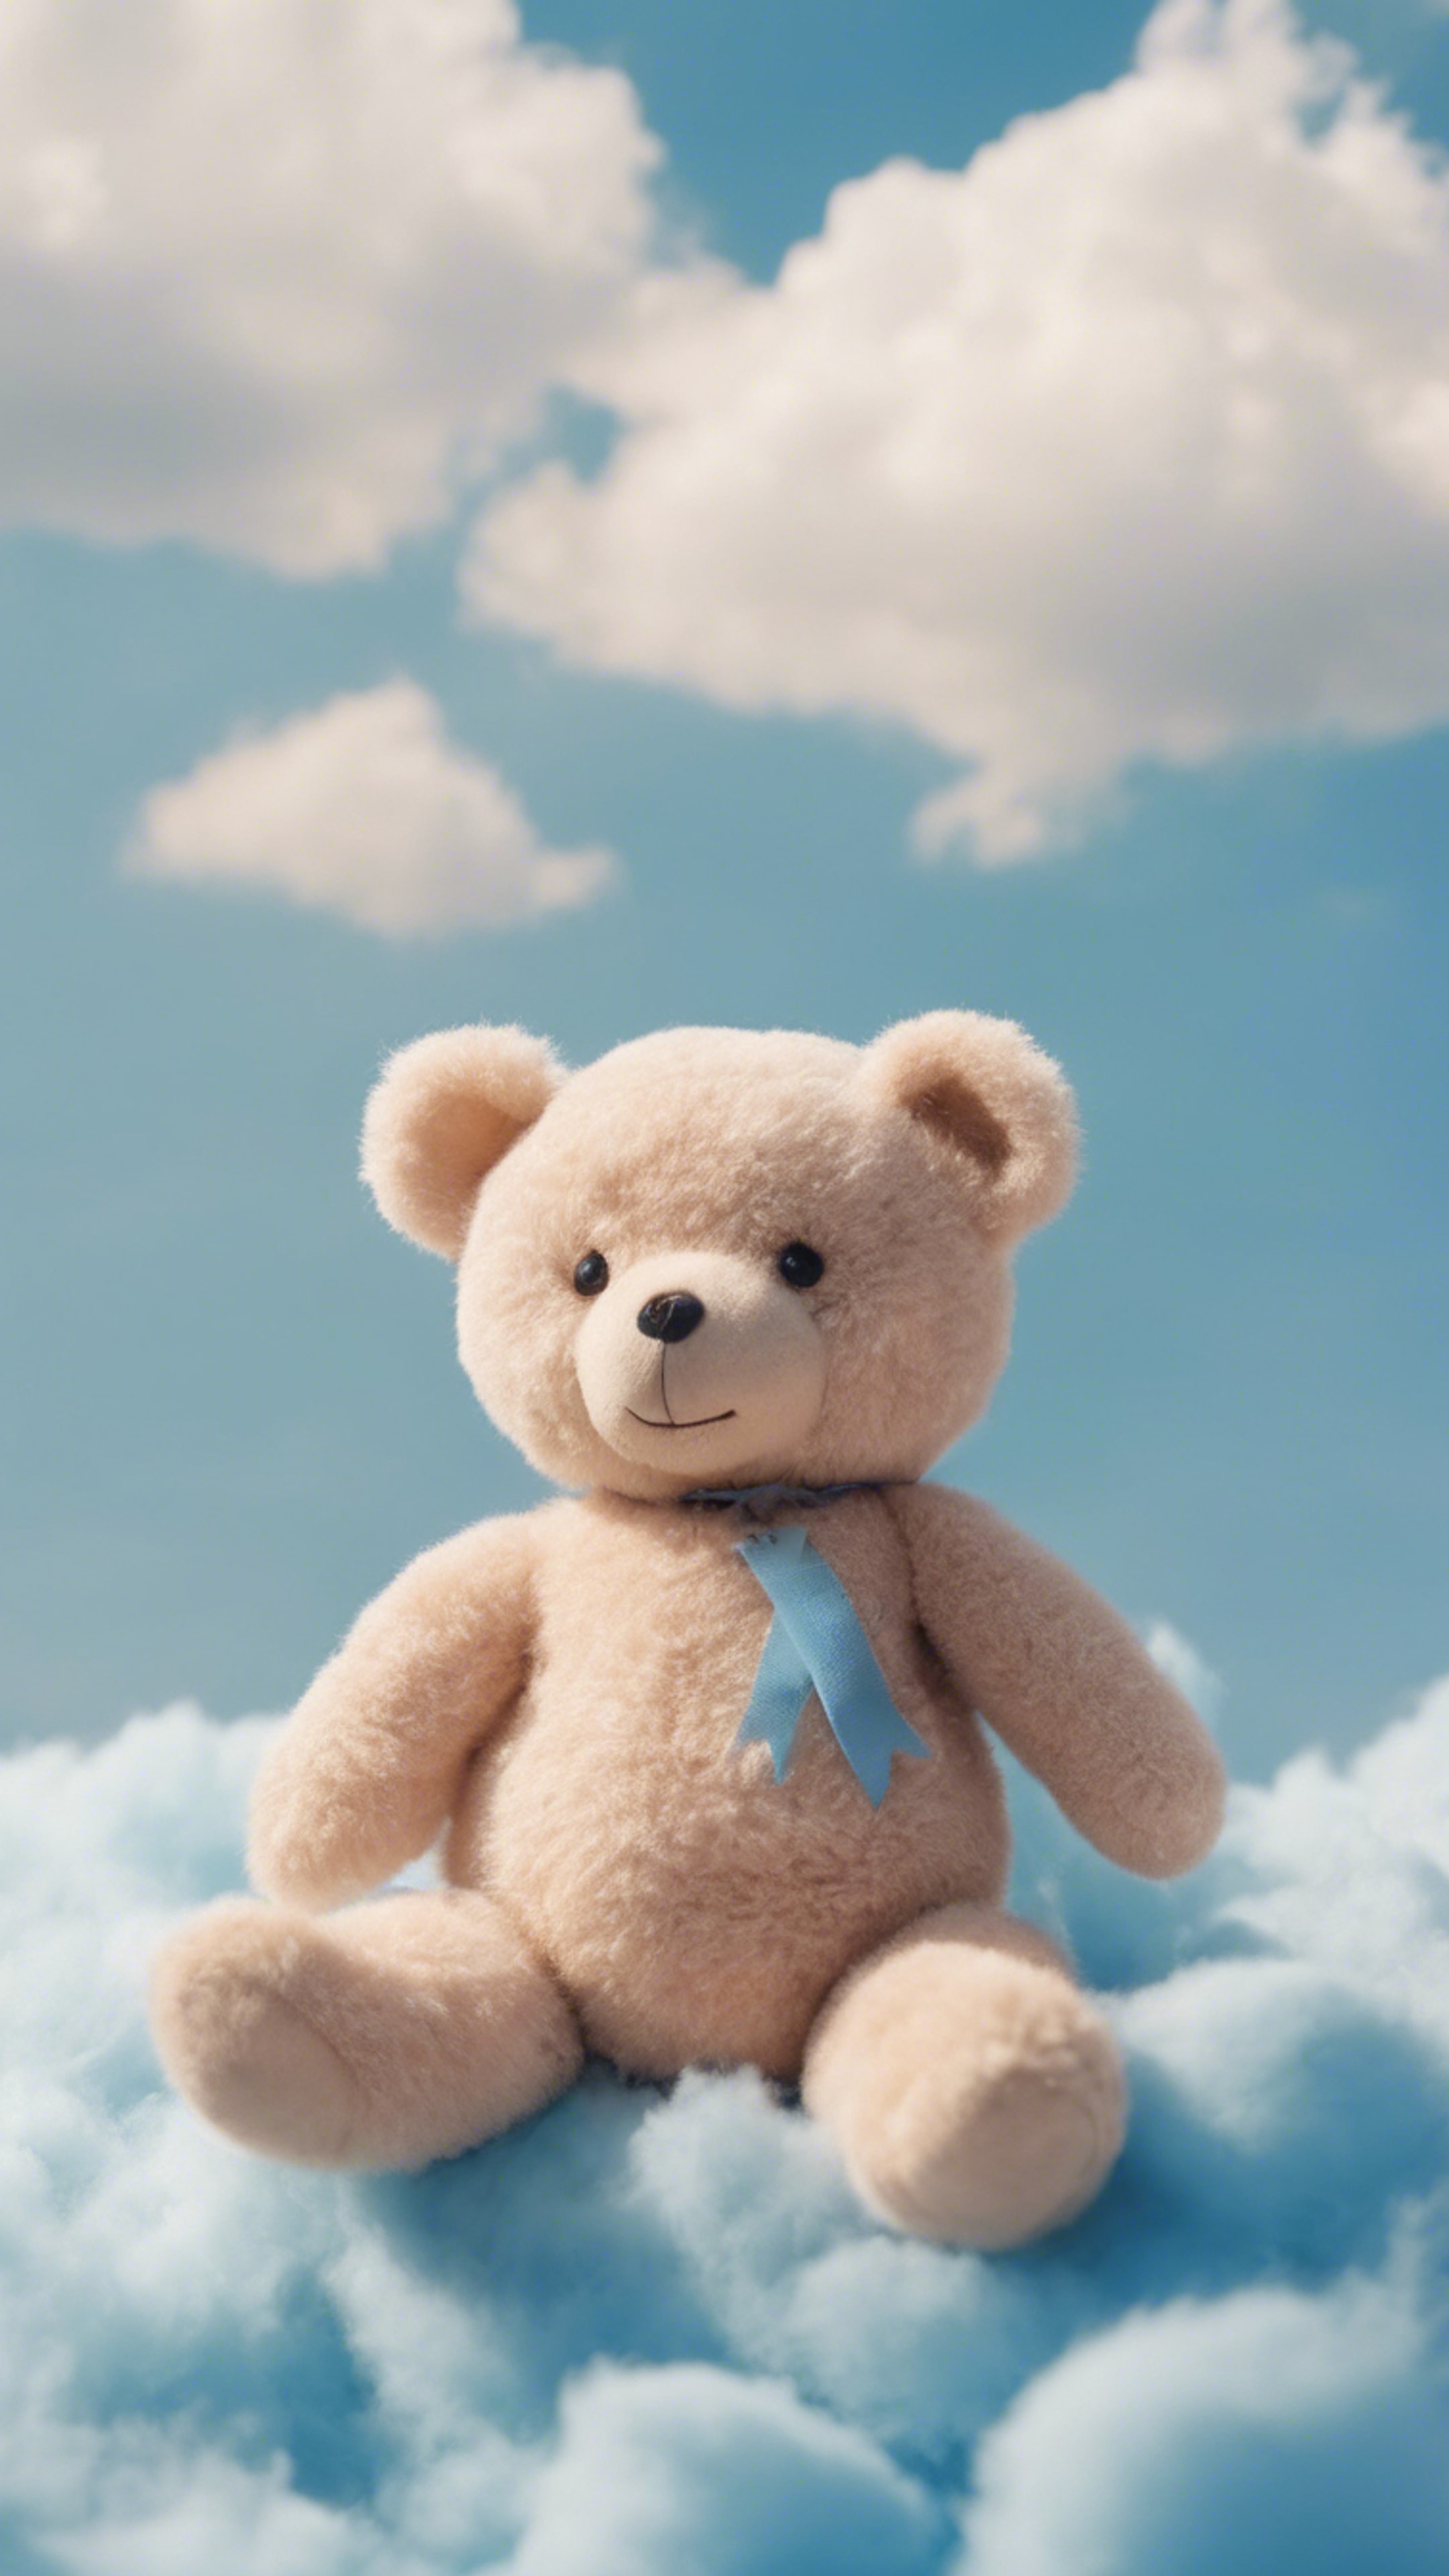 A kawaii beige teddy bear sitting on a soft fluffy cloud in a blue sky. Tapeta na zeď[56112c47d15a43519872]